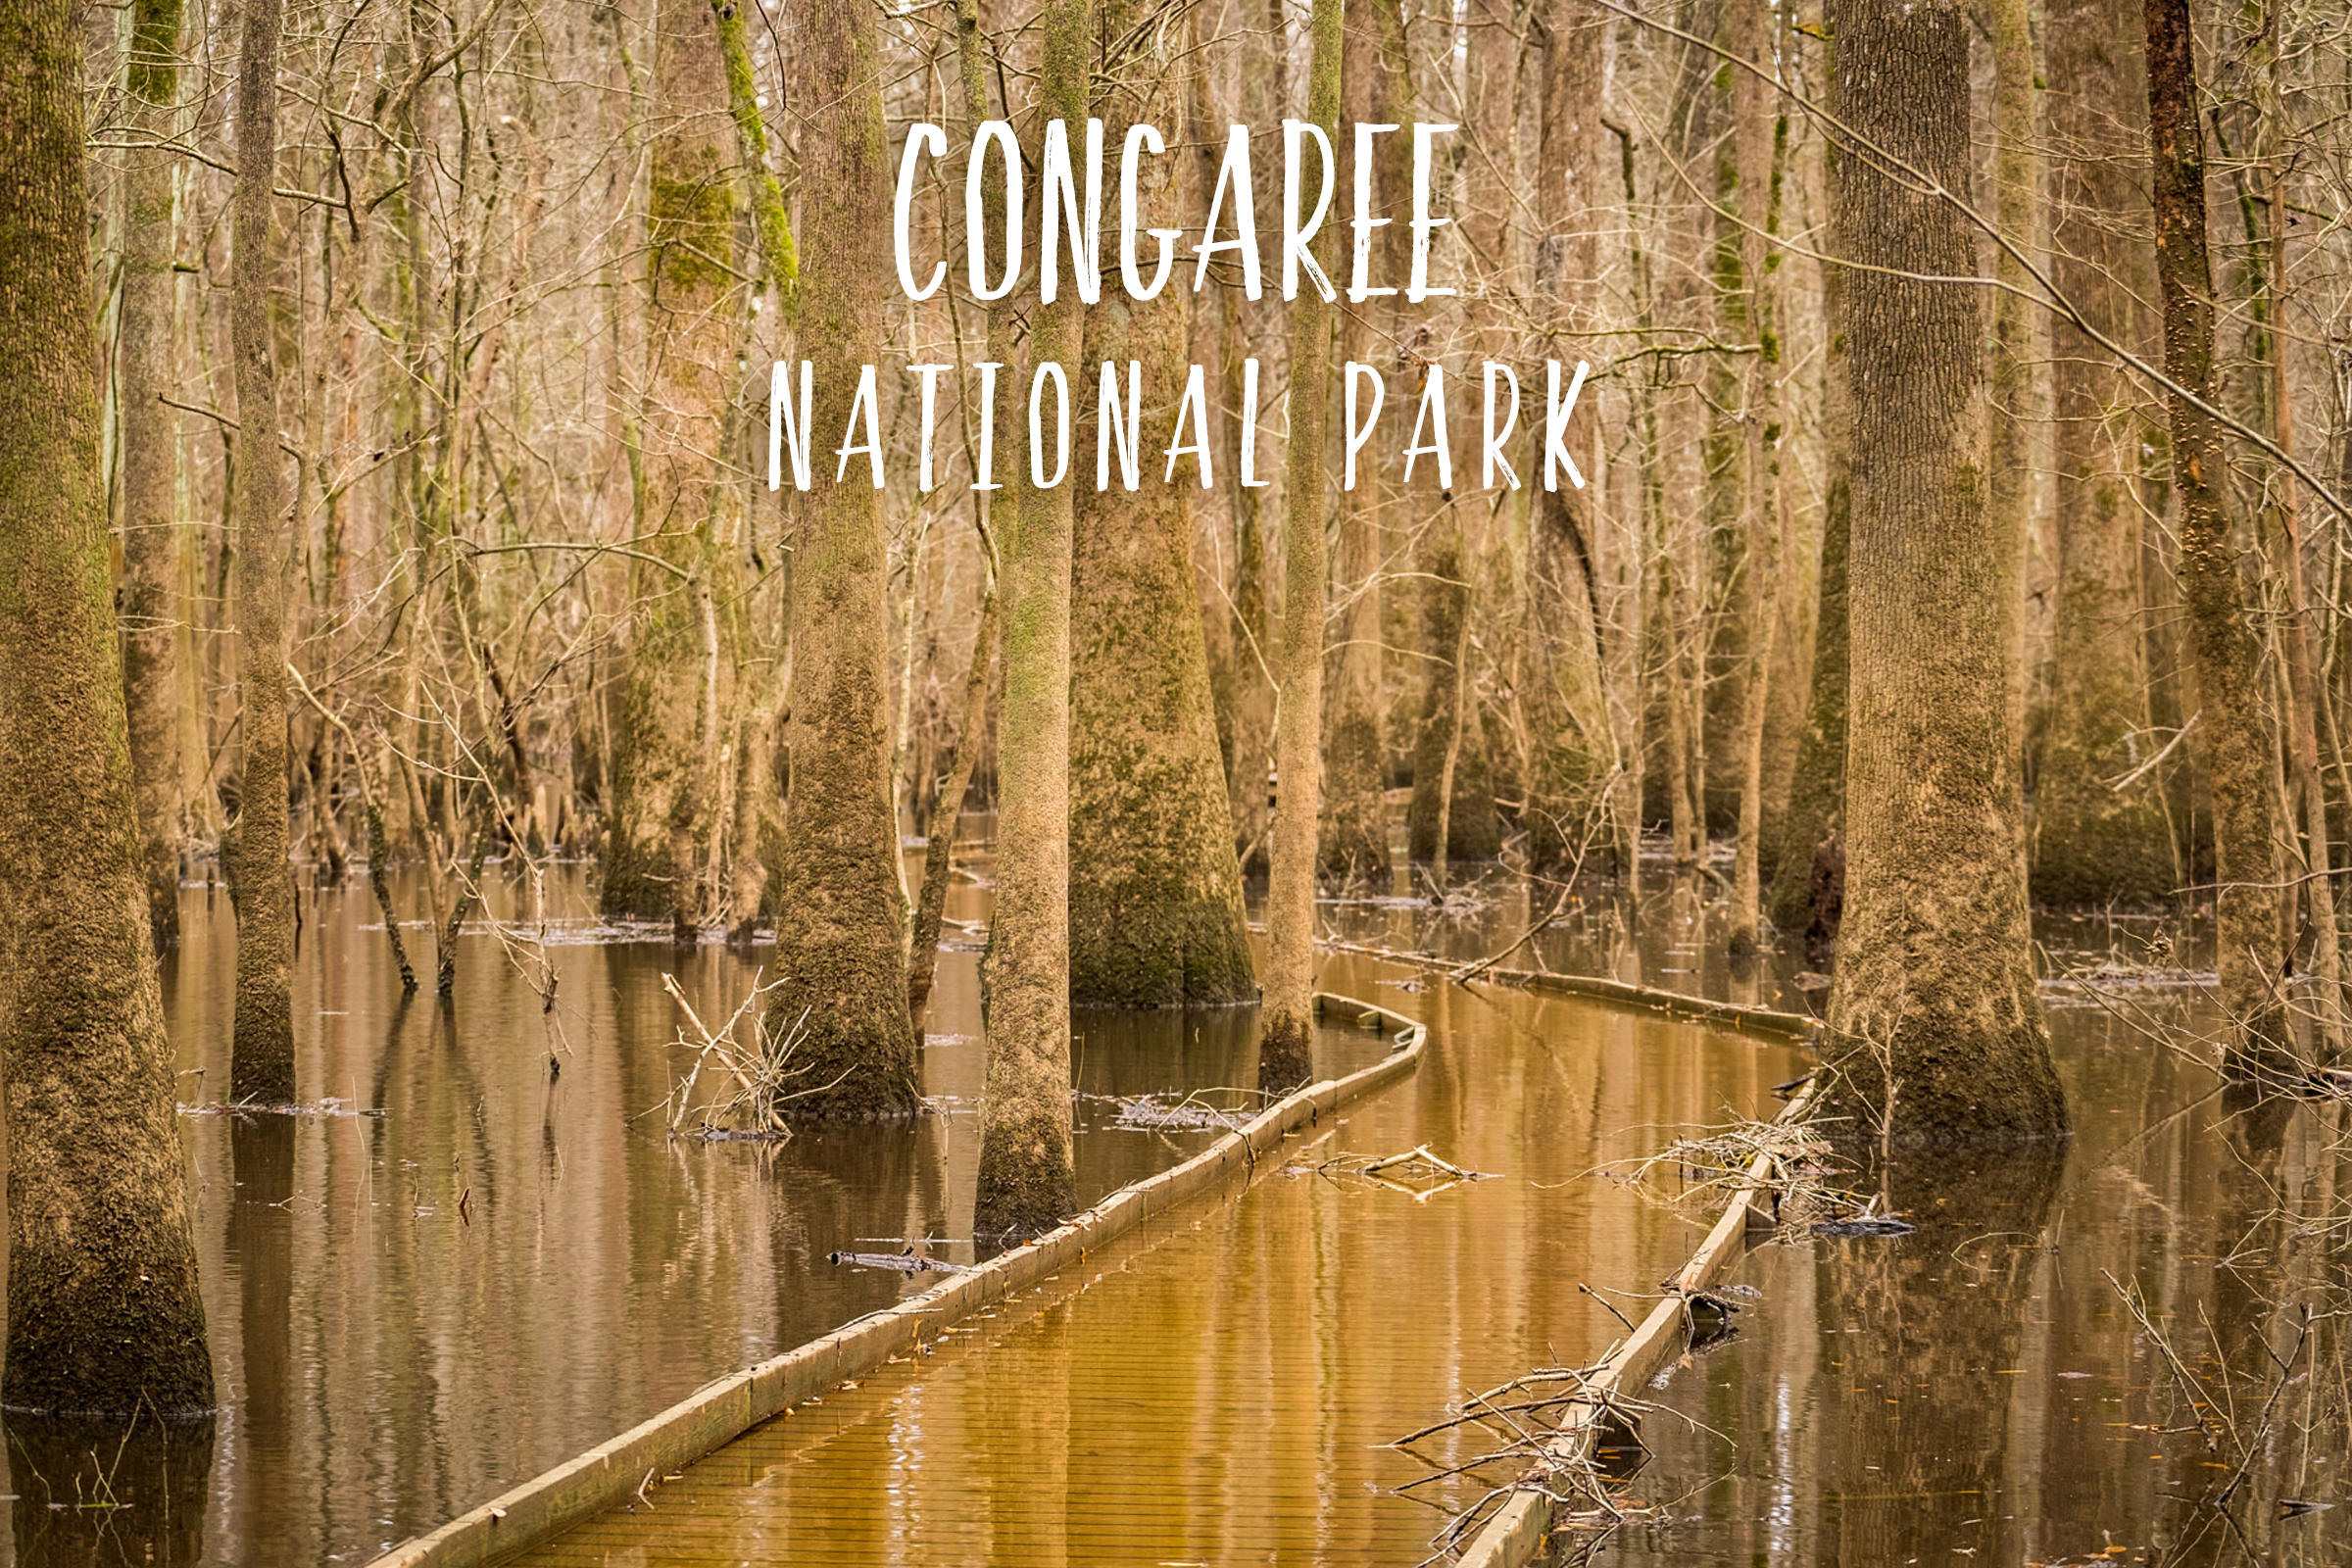 Congaree National Park | Park 8/59